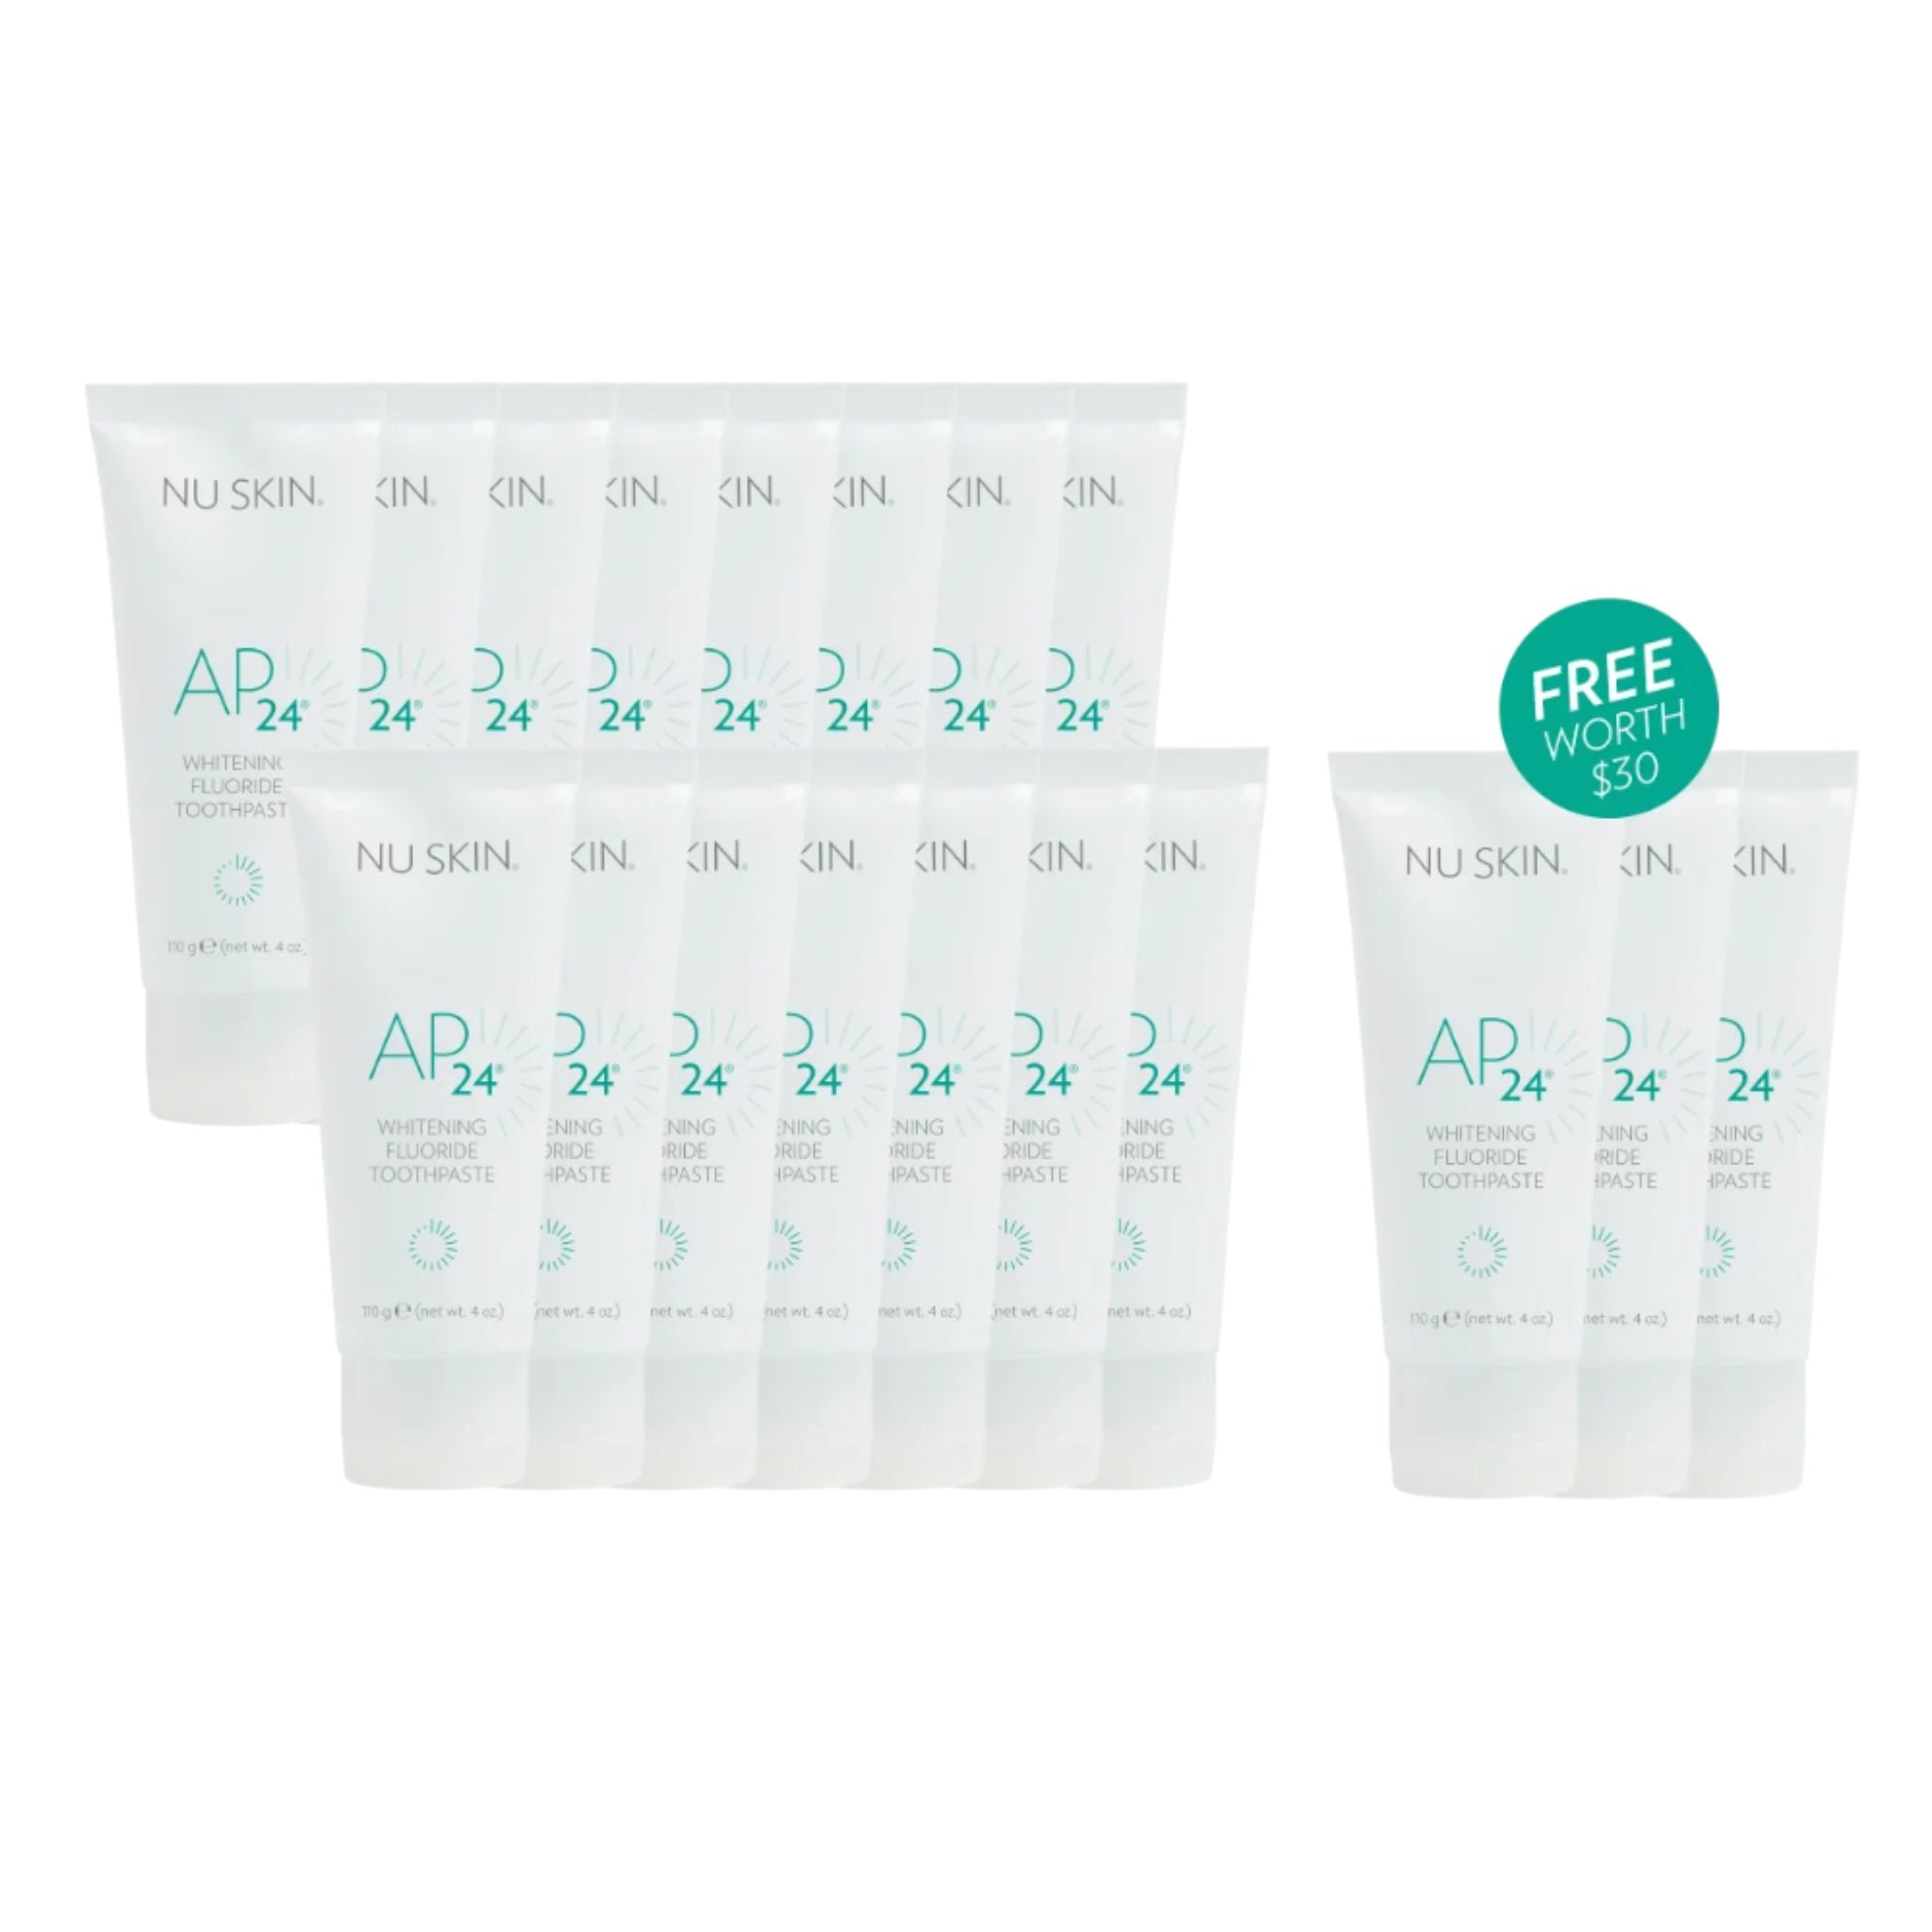 AP 24 Whitening Fluoride Toothpaste Bundle Pack - thatnatureworld